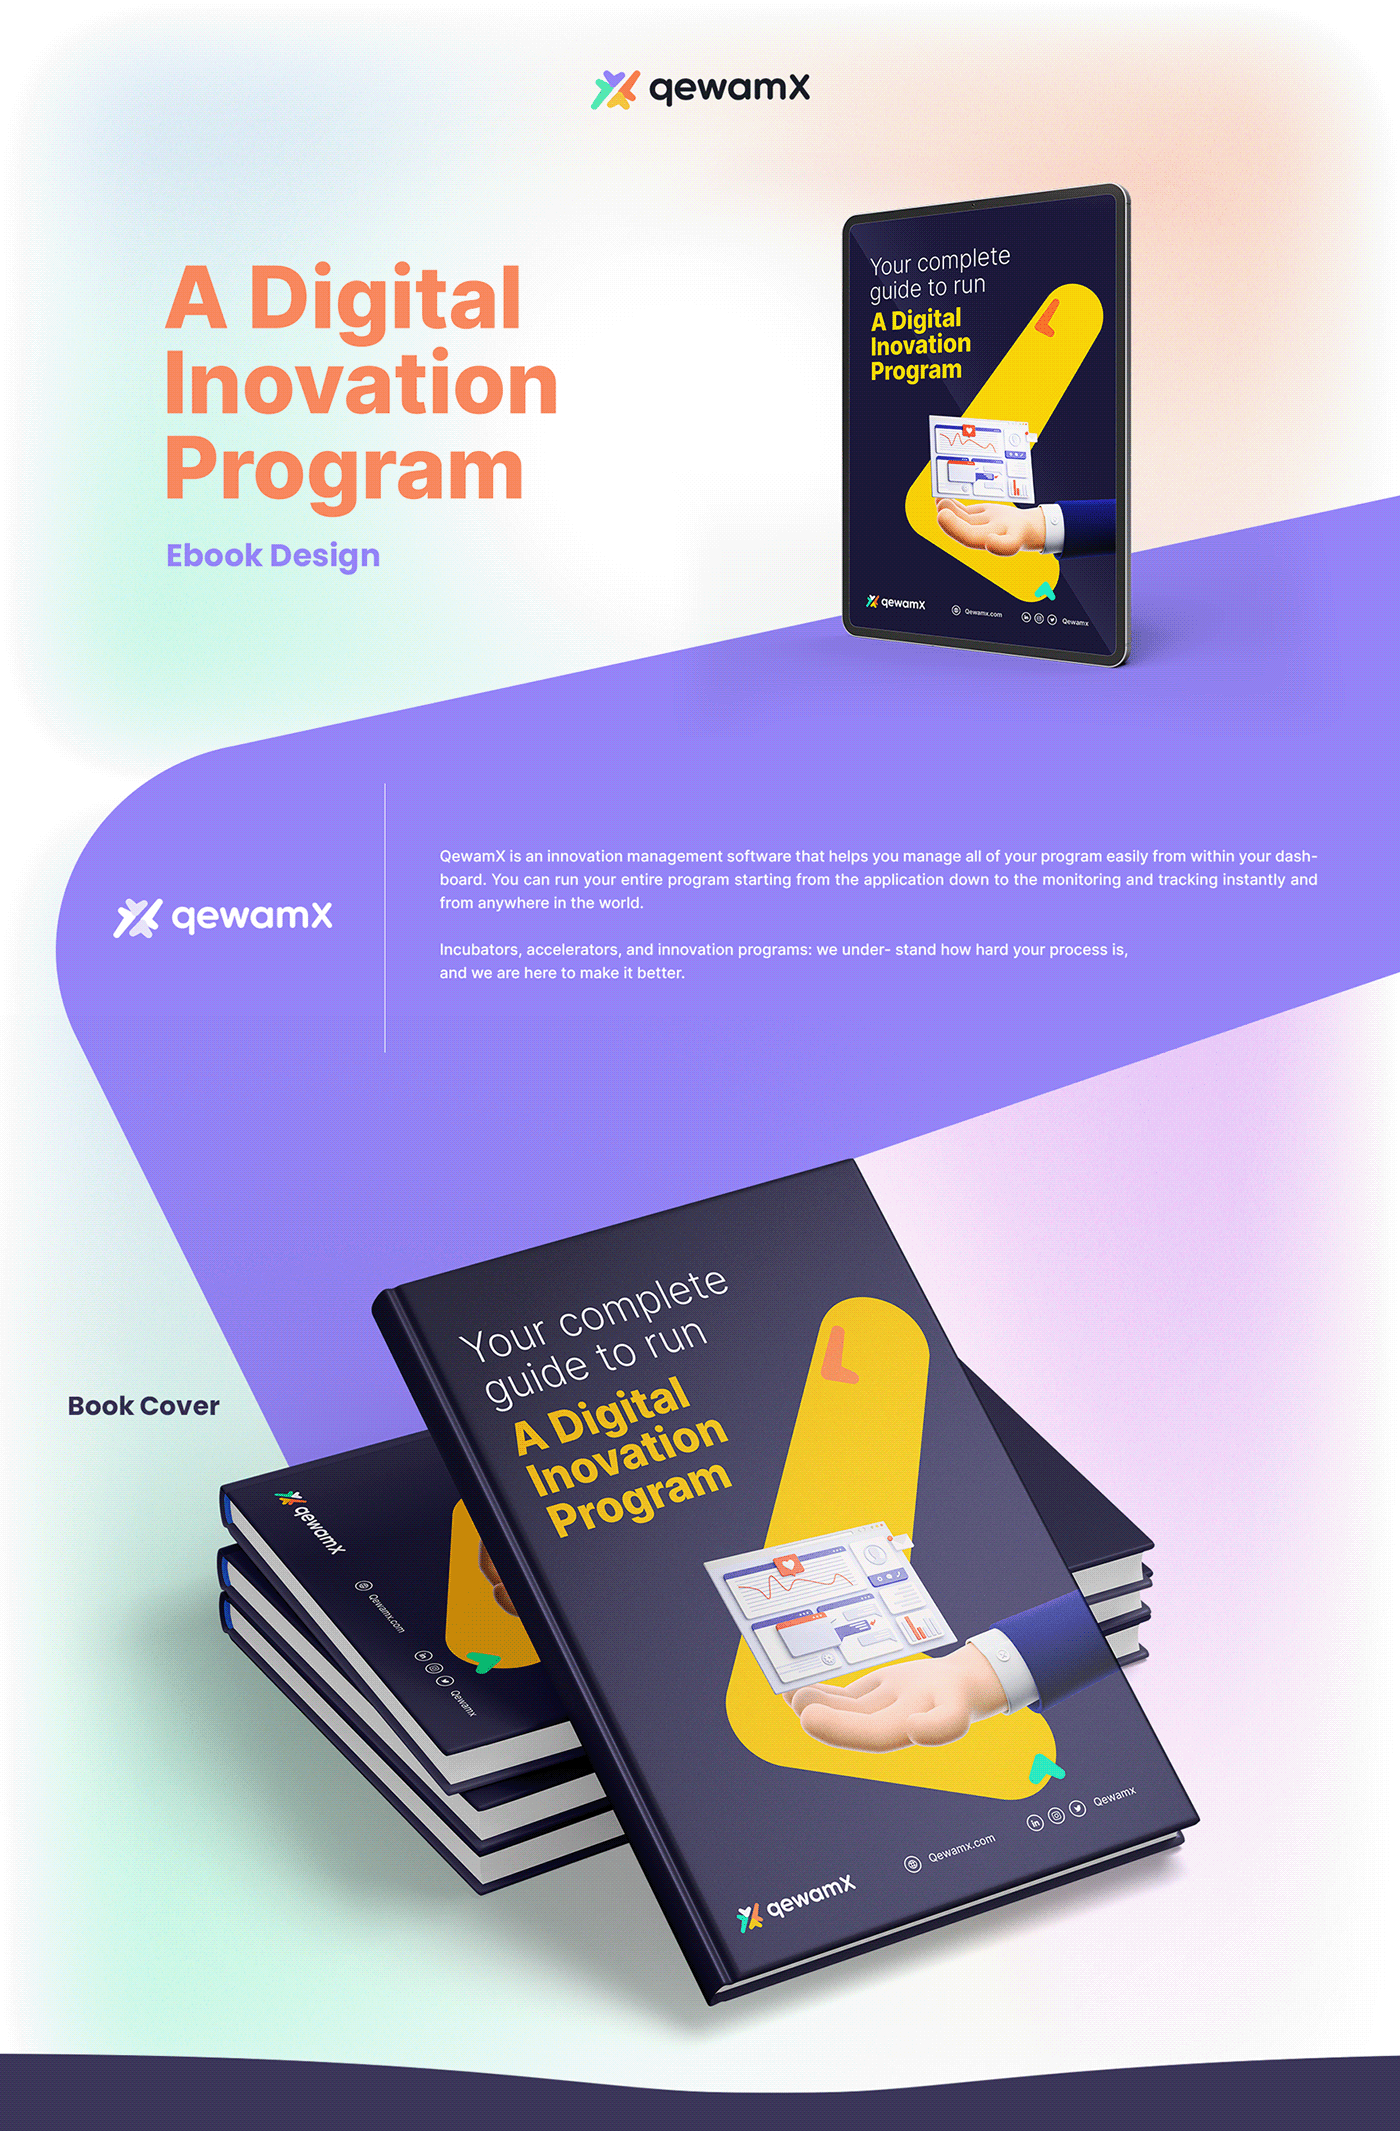 qewamx
ebook
inovation
program
ecommerce
creative
design
3d
figma
